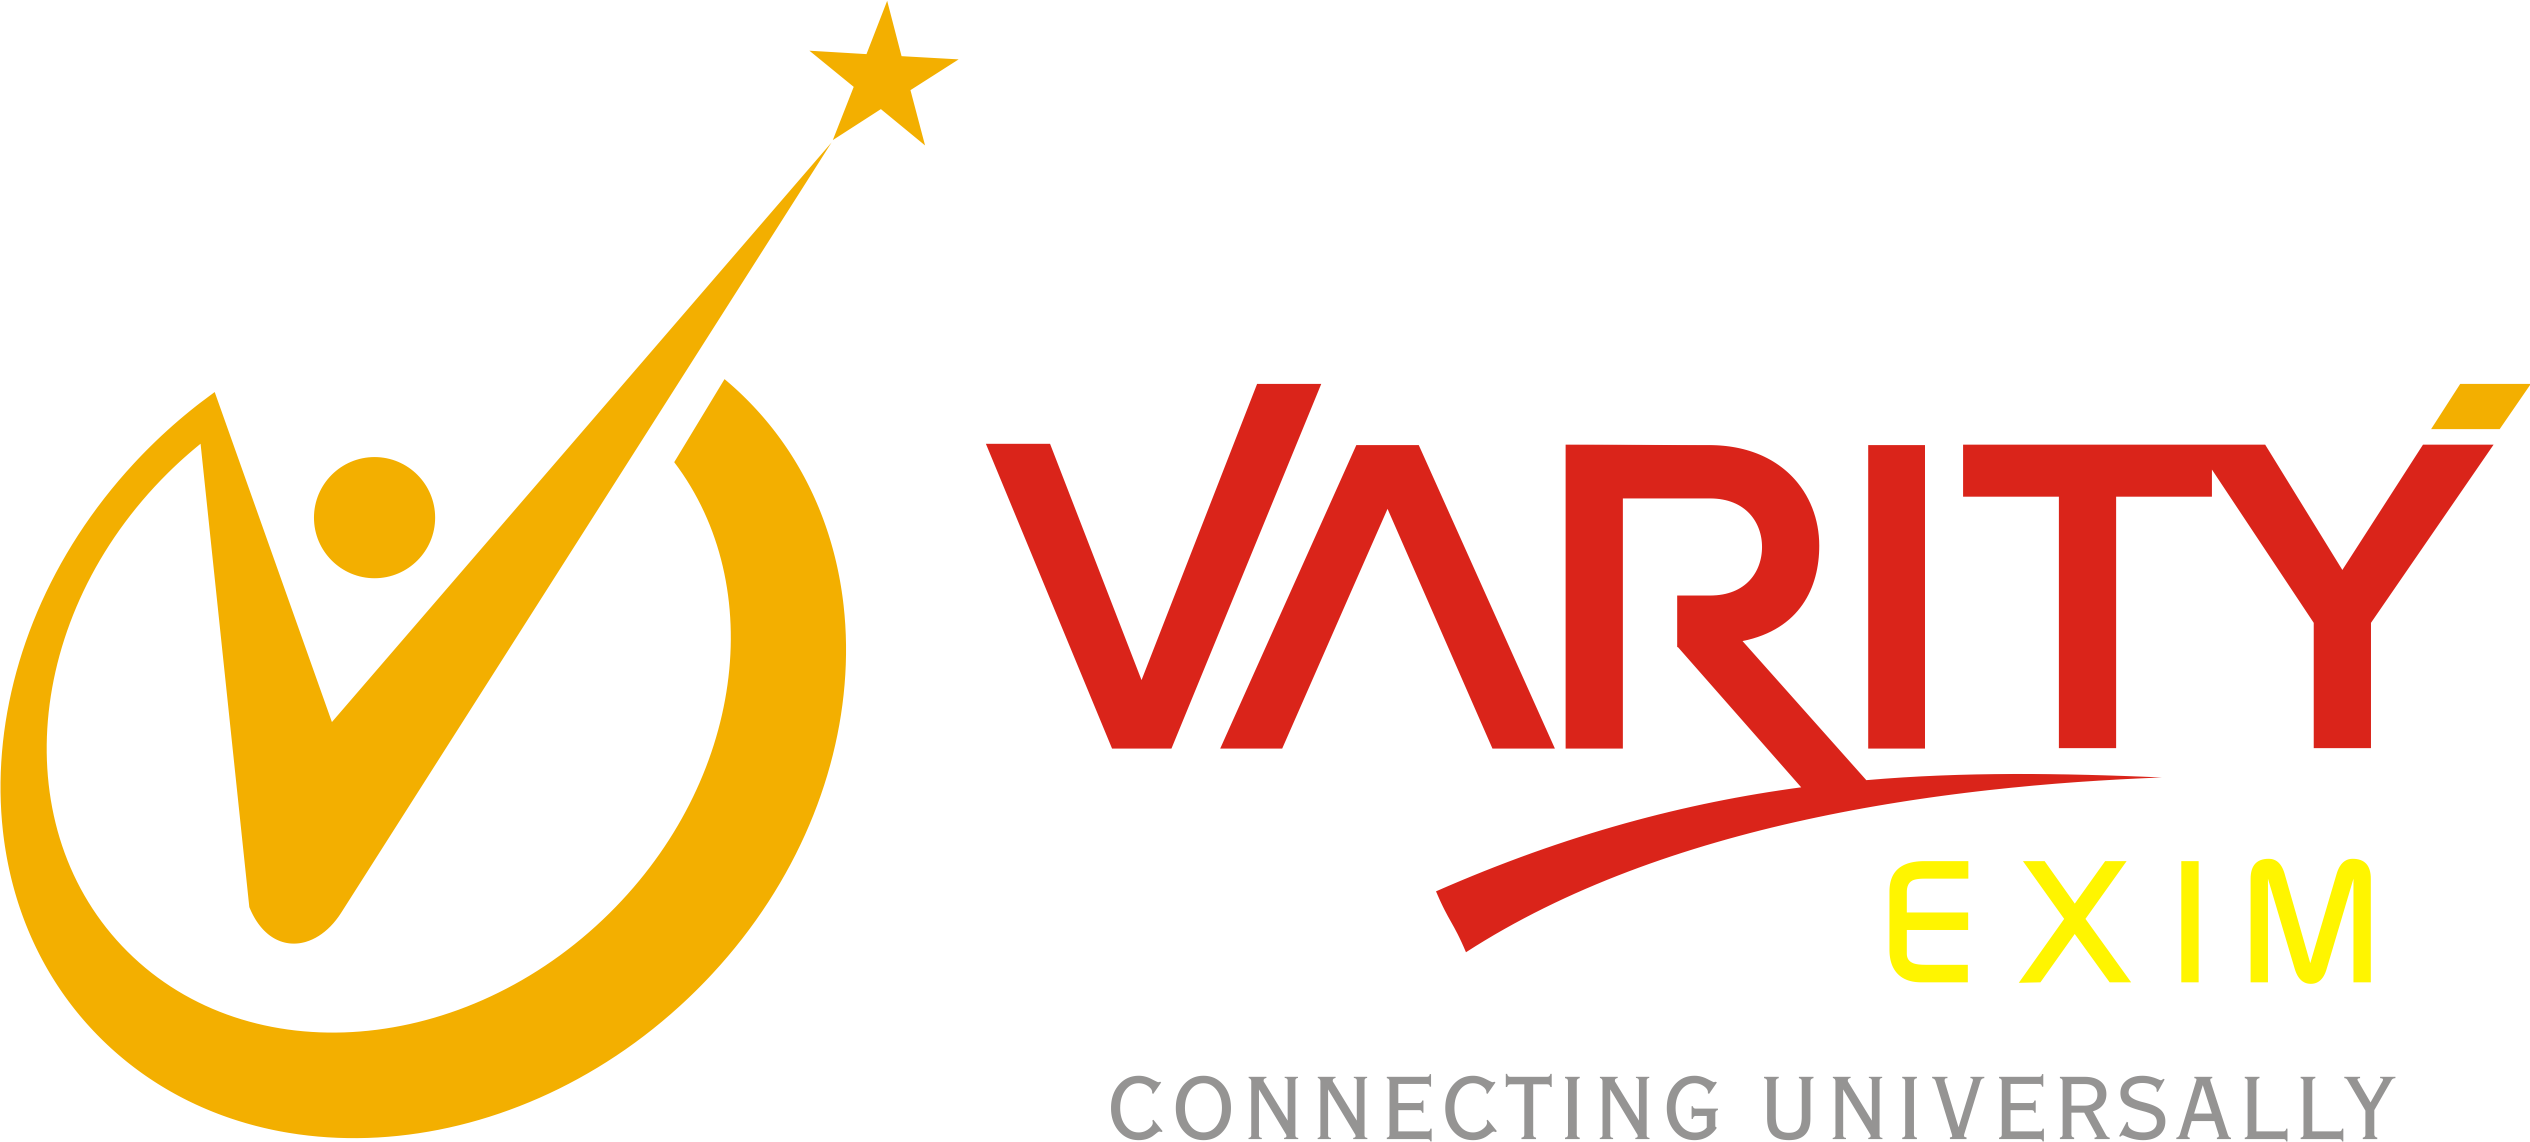 VARITY Exim Final Logo 09